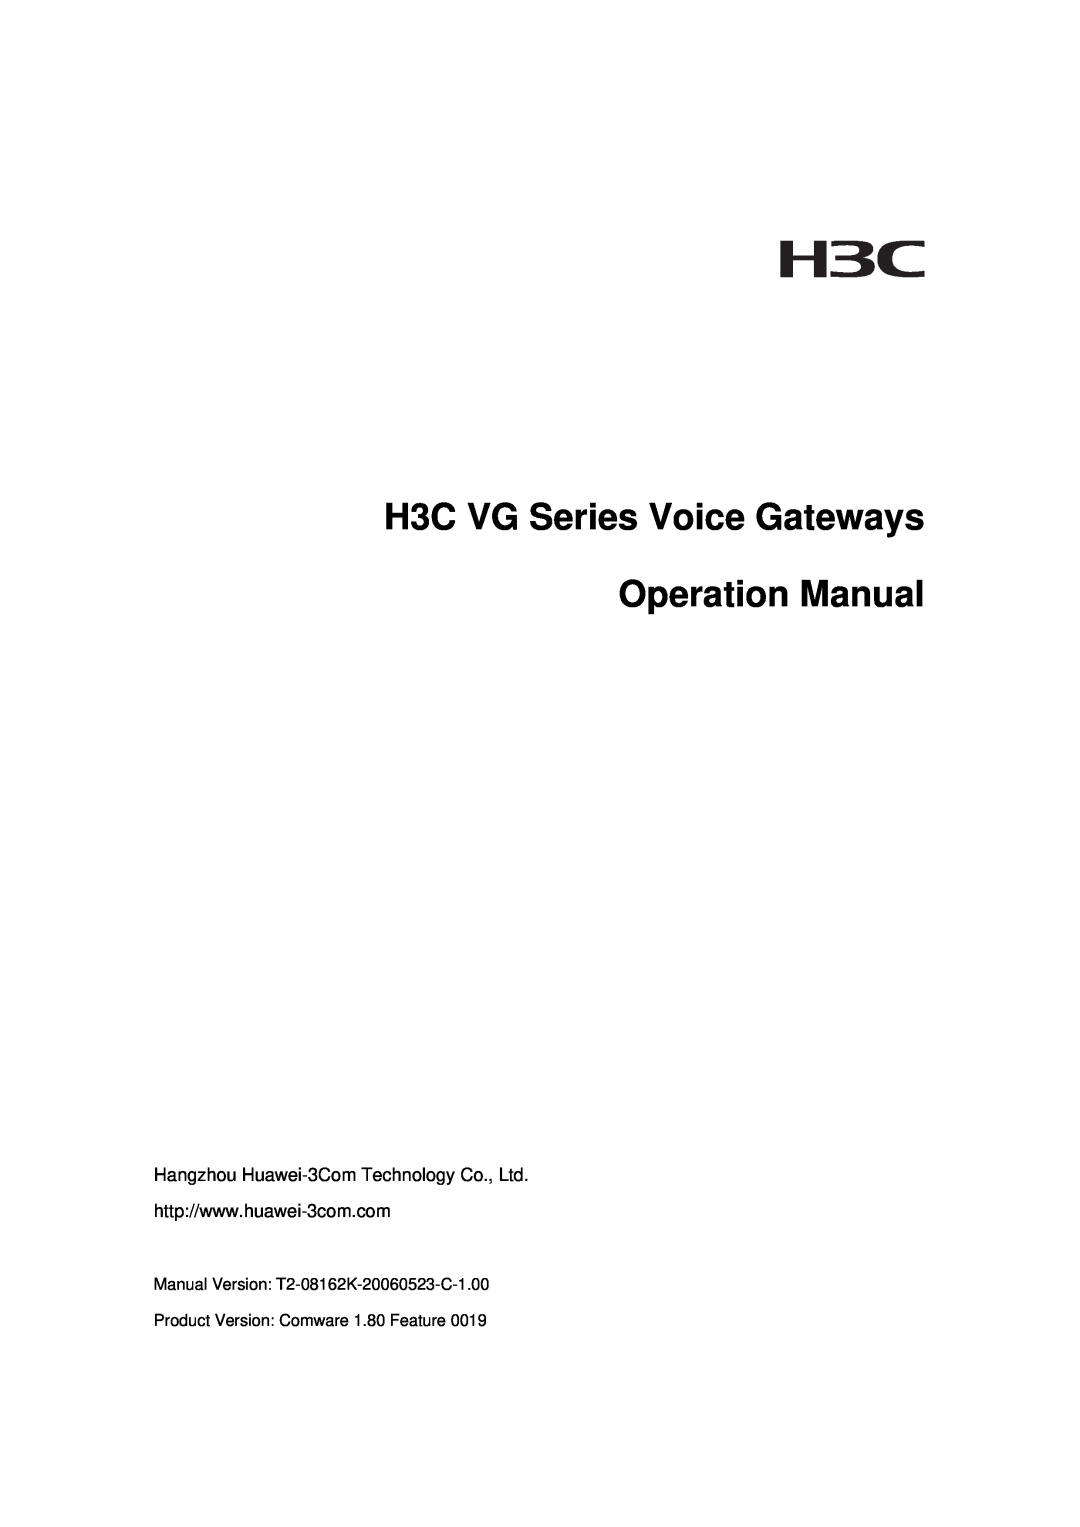 3Com operation manual H3C VG Series Voice Gateways Operation Manual, Manual Version T2-08162K-20060523-C-1.00 